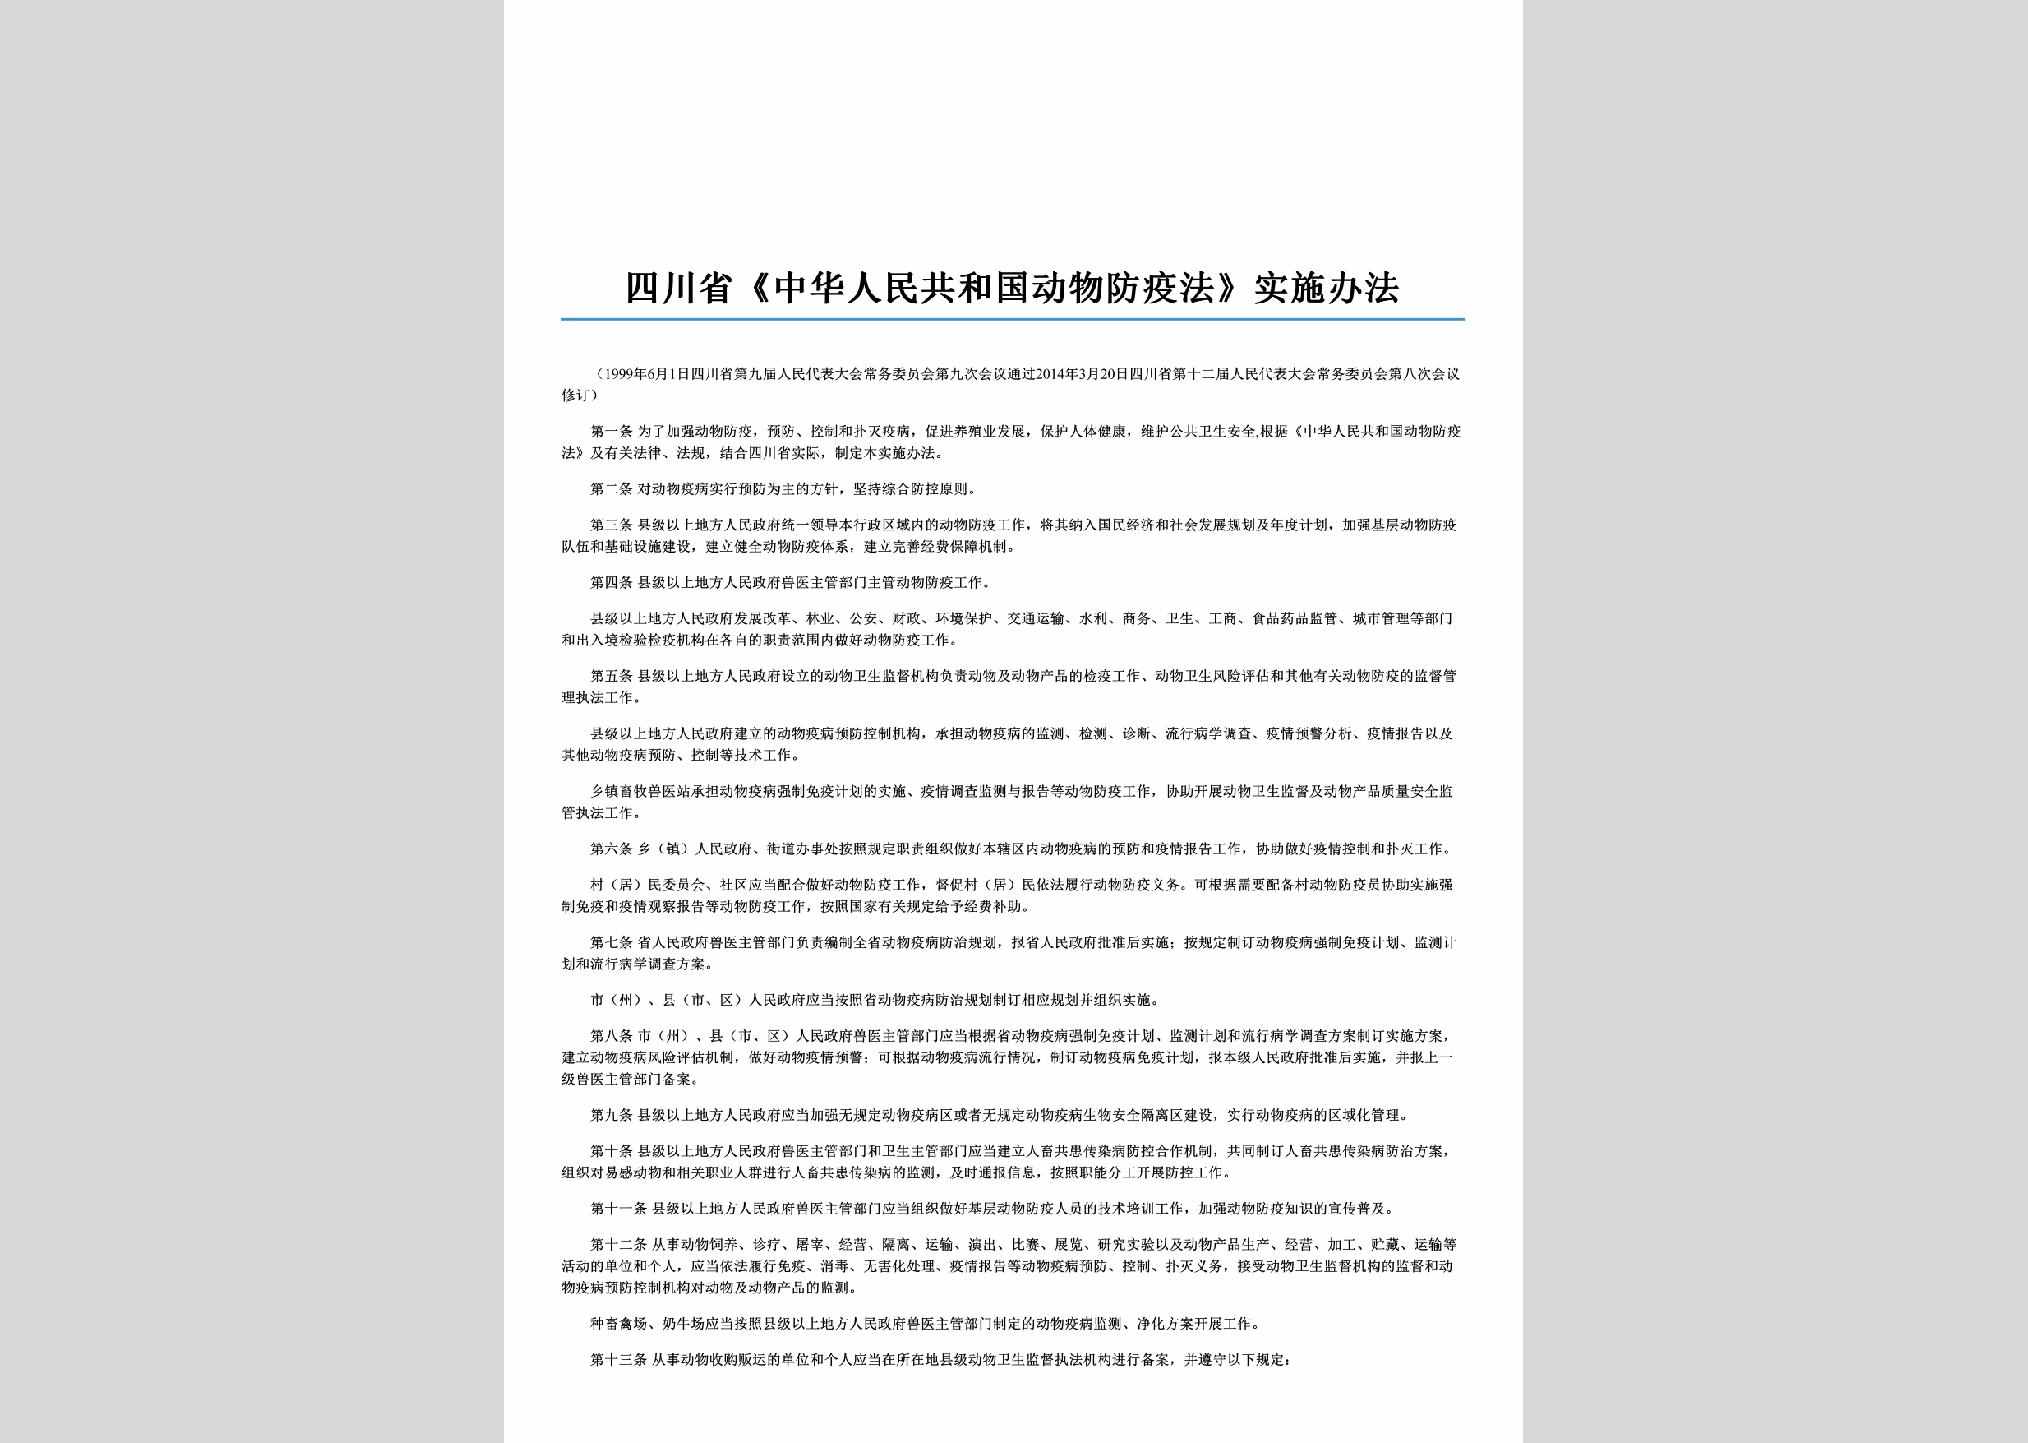 SC-DWFYSSBF-2014：四川省《中华人民共和国动物防疫法》实施办法